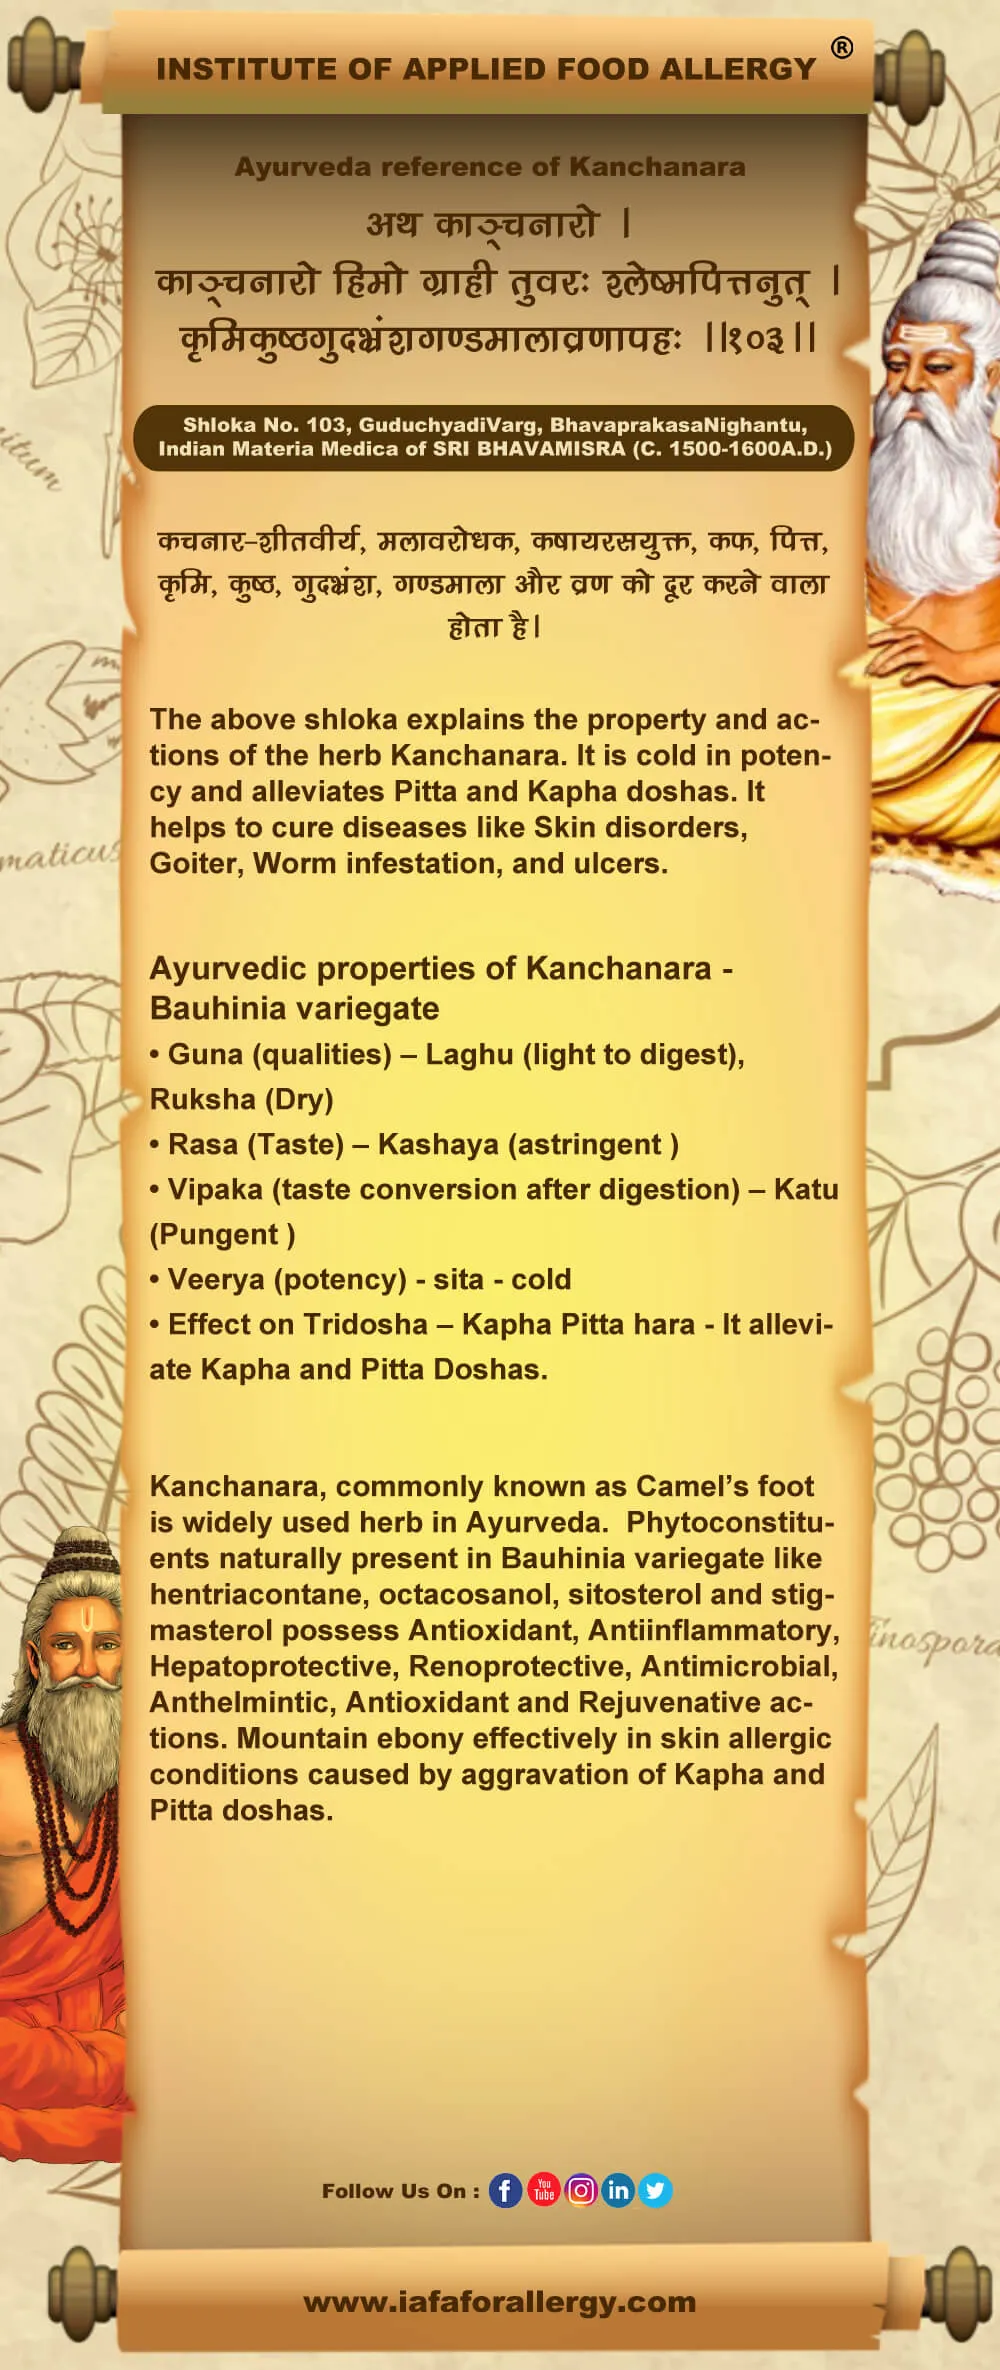 Ayurveda reference of Kanchanara - Bauhinia variegate